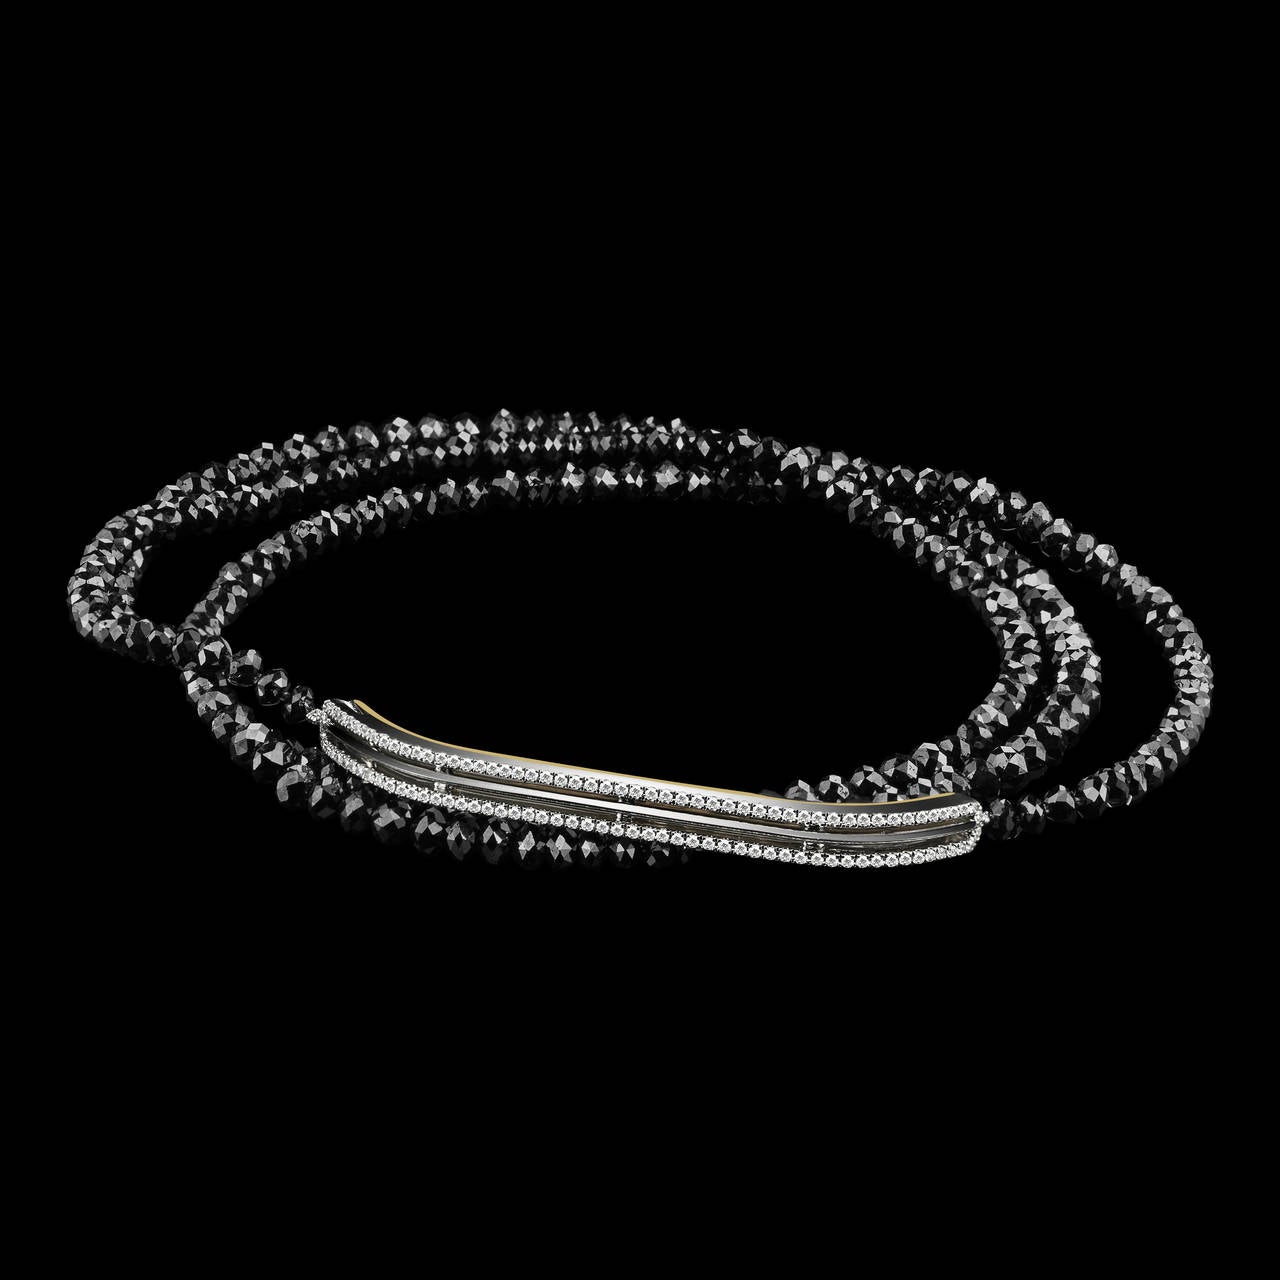 Narrow knife-edged Diamond bar bracelet with Black Diamond strand. Total diamond weight is 35.52 carats. Bracelet features 106 round-cut G VS 1mm white Diamonds with a total weight of 0.52 carats, and 171 Black Diamonds measuring 3.7 x 4.7 mm each